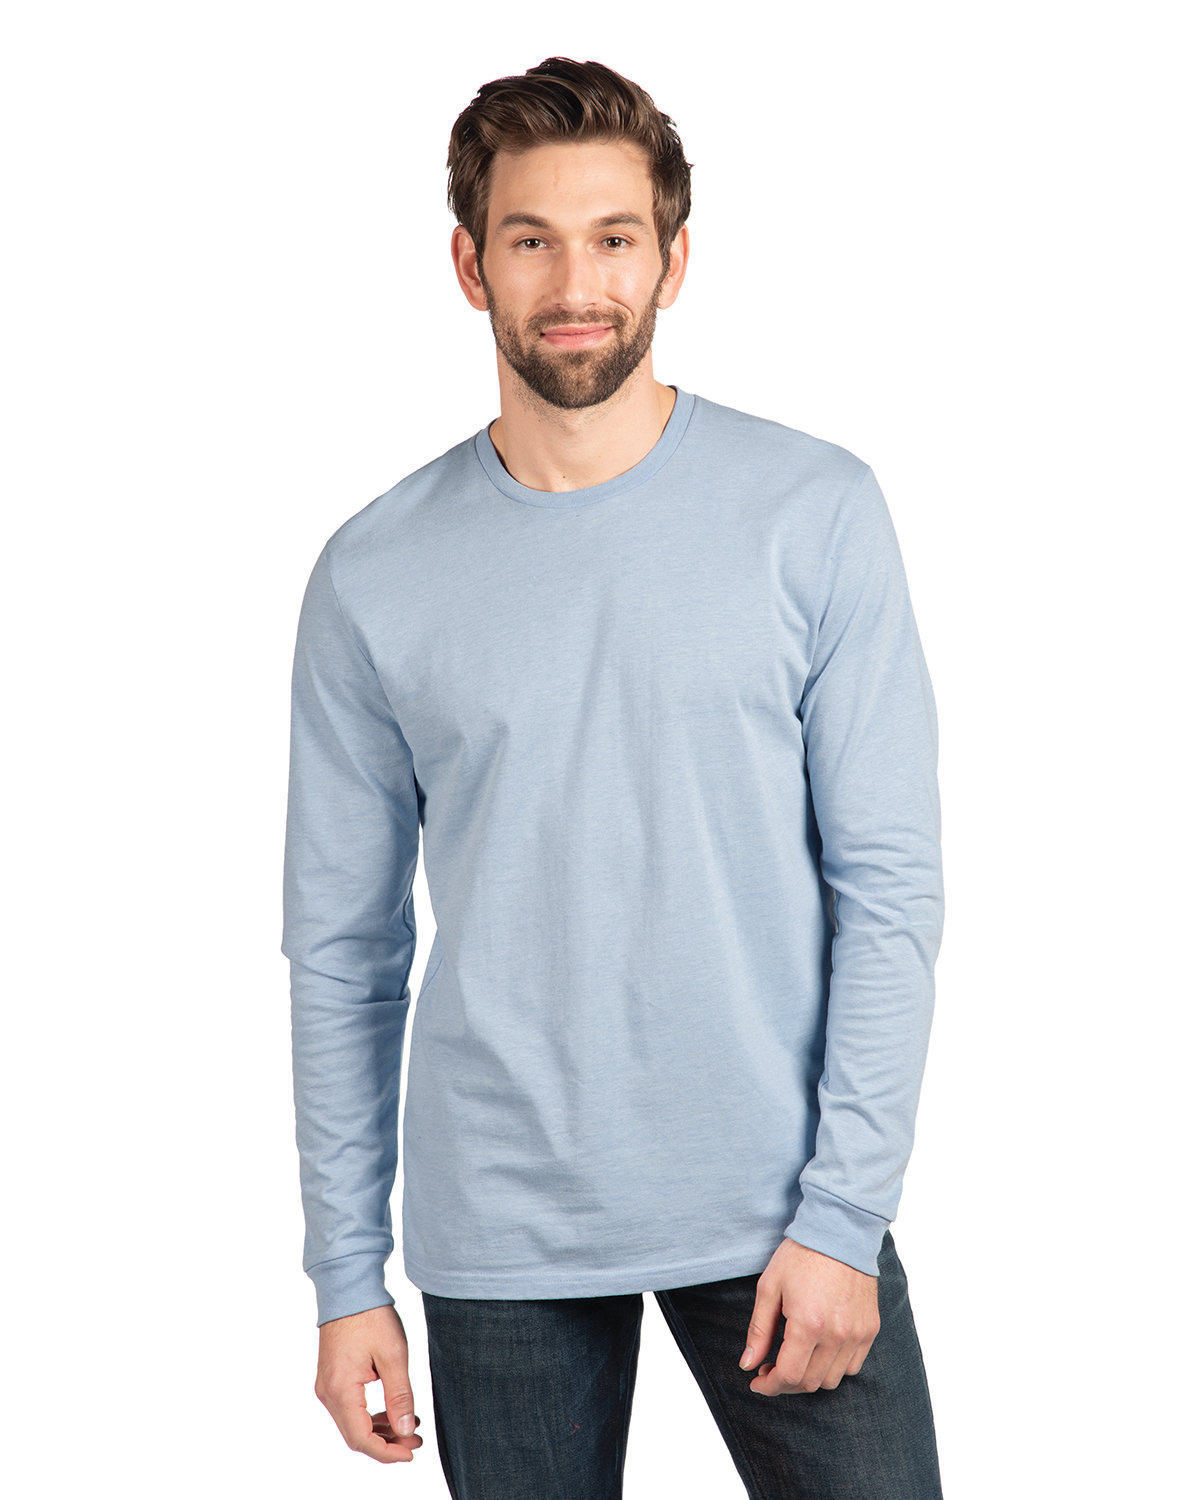 Next Level Apparel Unisex CVC Long-Sleeve T-Shirt | US Generic Non-Priced